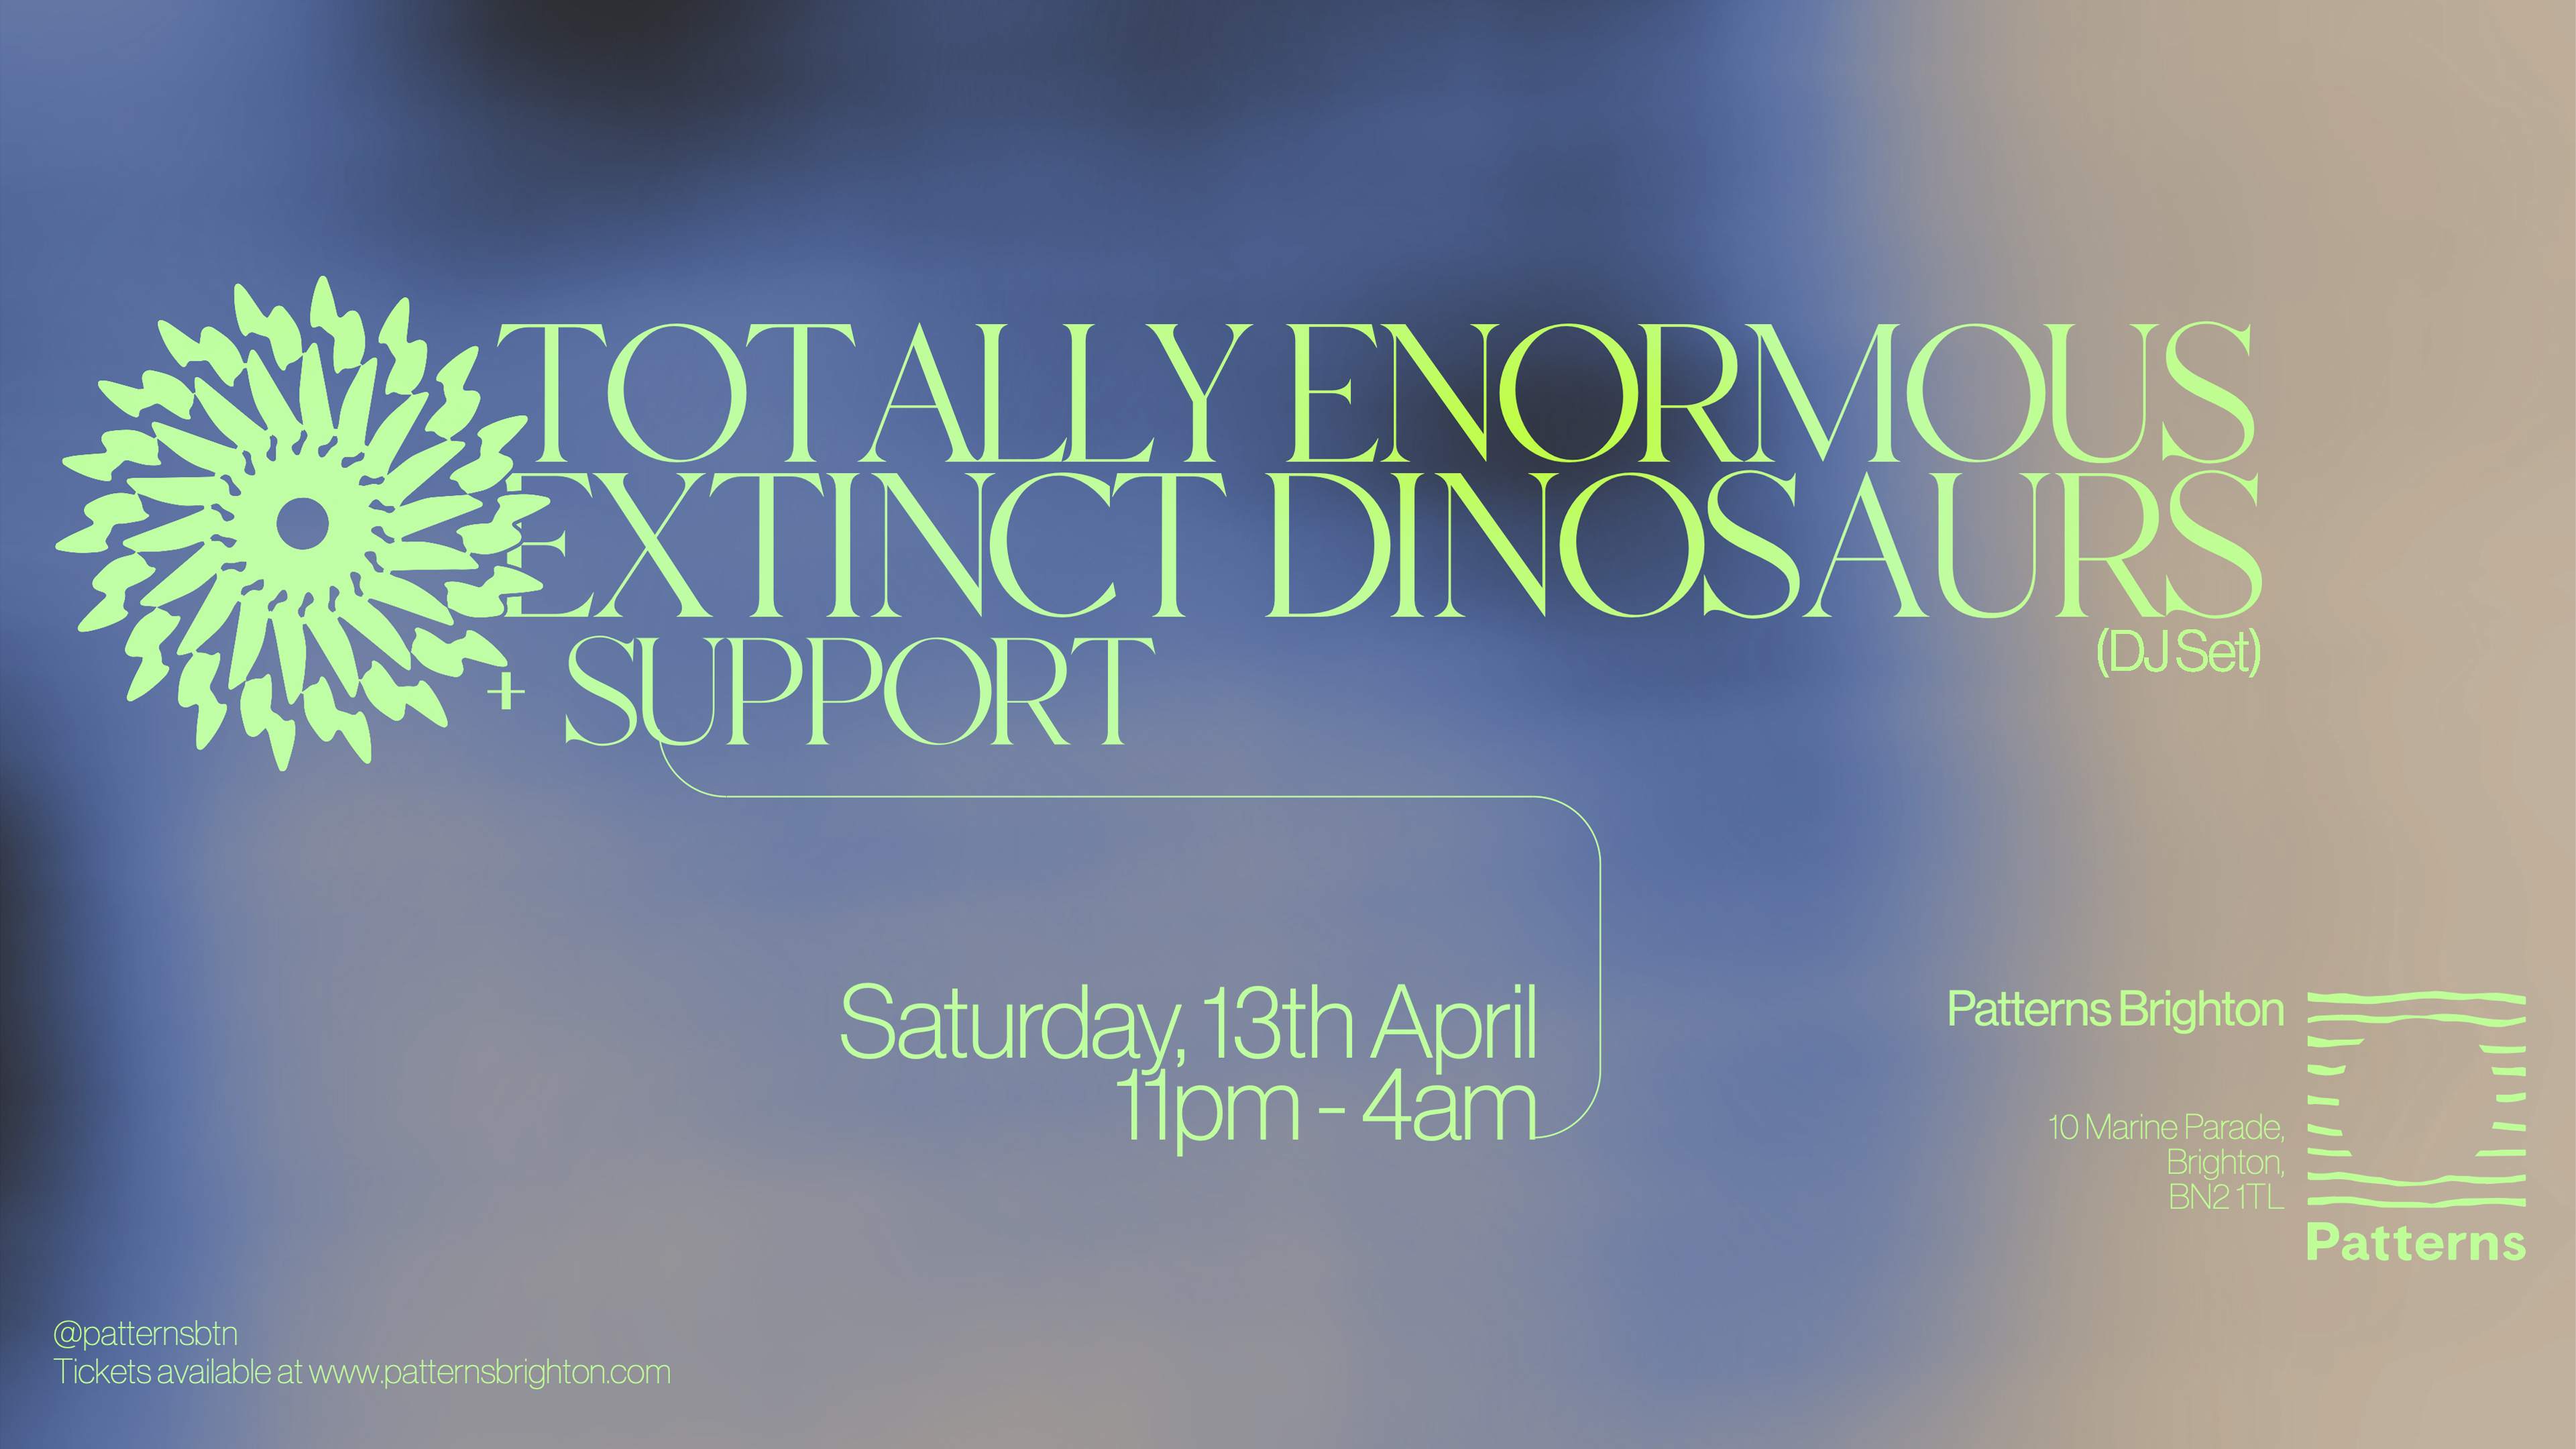 Totally Enormous Extinct Dinosaurs (DJ) - 3 hours - Página frontal